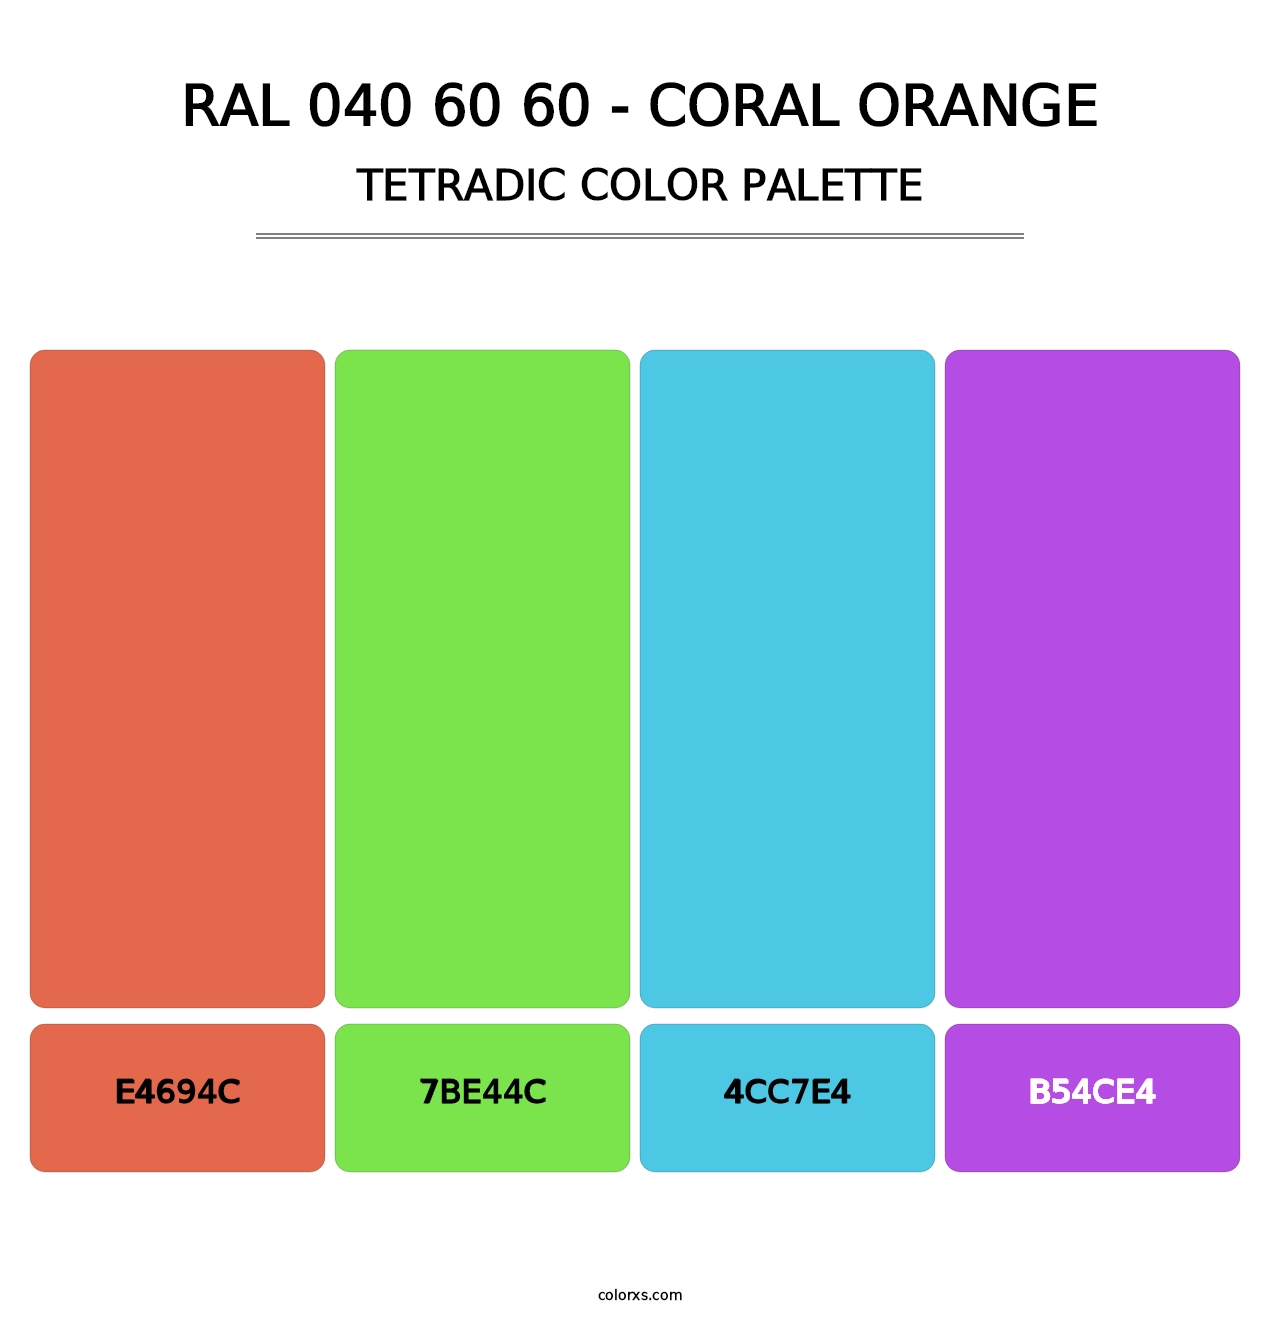 RAL 040 60 60 - Coral Orange - Tetradic Color Palette